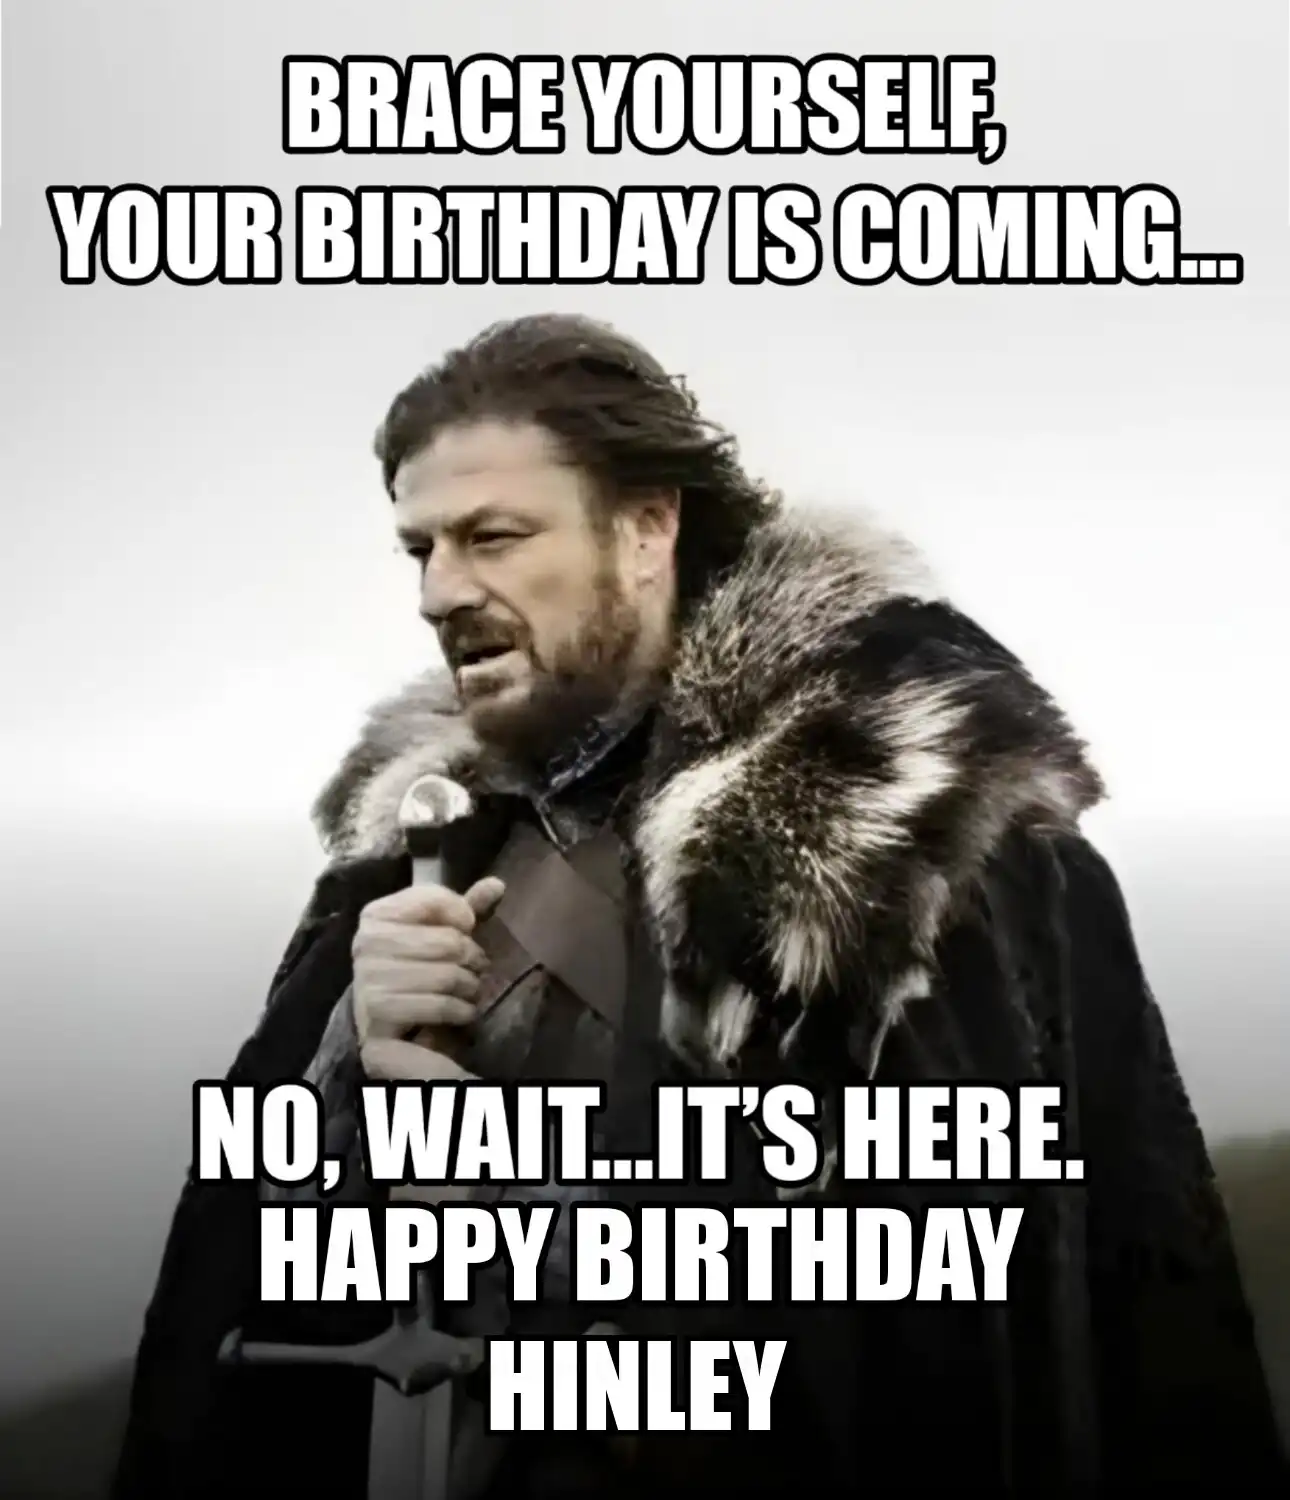 Happy Birthday Hinley Brace Yourself Your Birthday Is Coming Meme